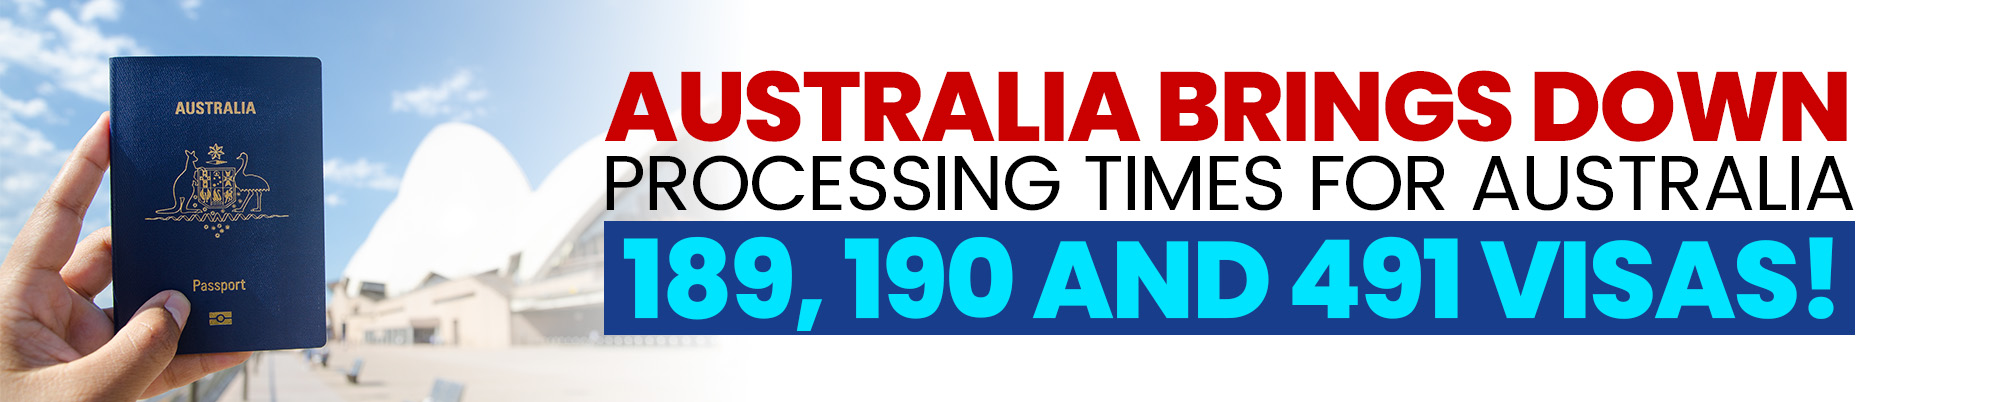 australia-reduce-processing-times-for-australia-189-190-and-491-visas